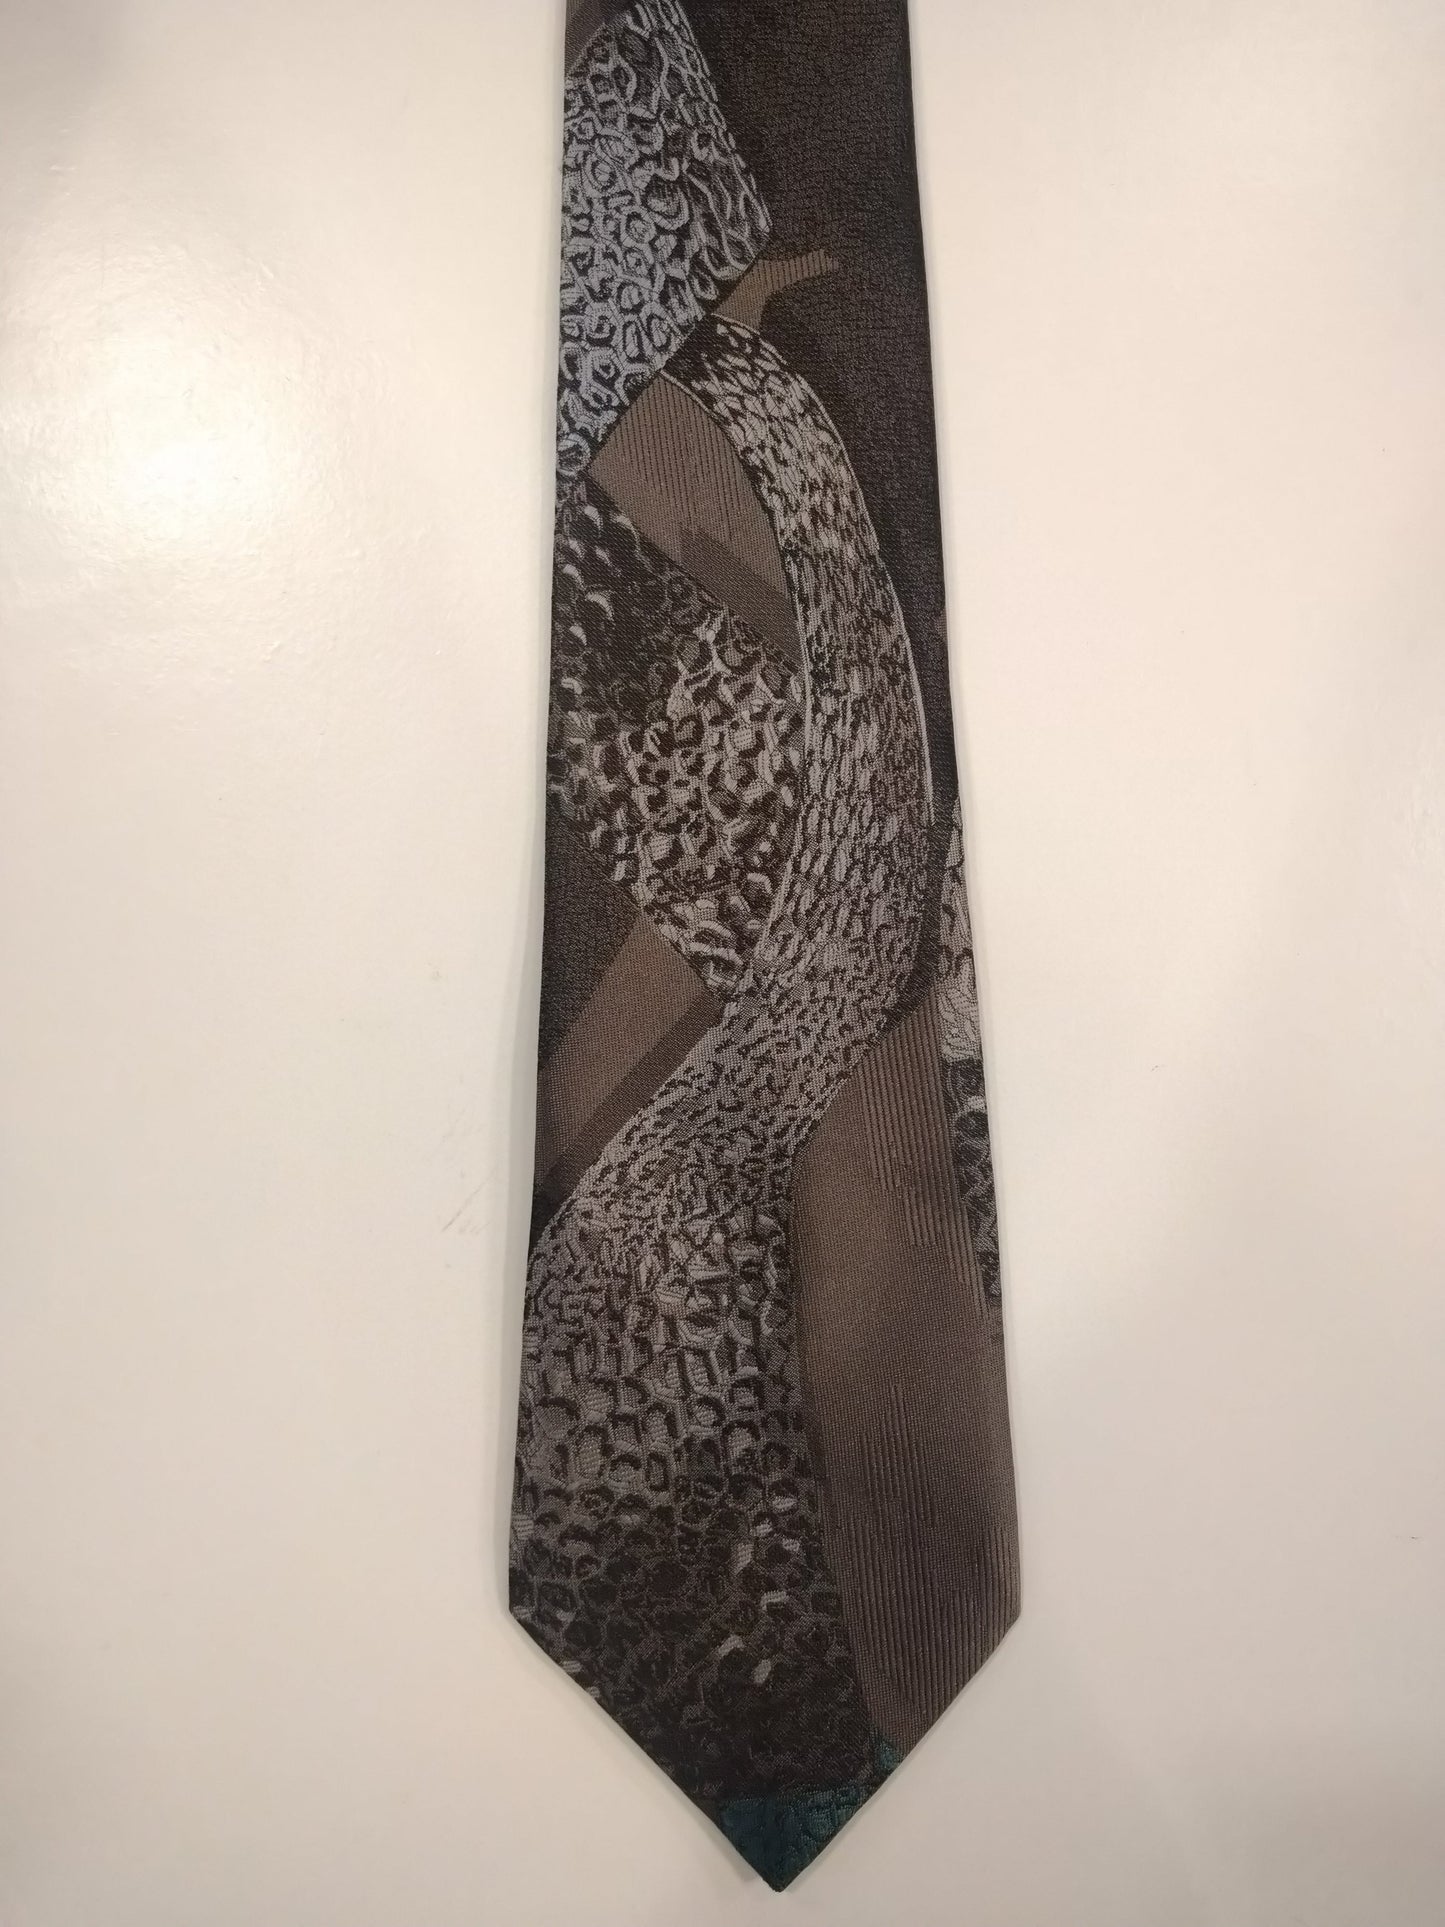 Rael Brook Polyester cravatta. Motivo lucido in argento verde marrone grigio.